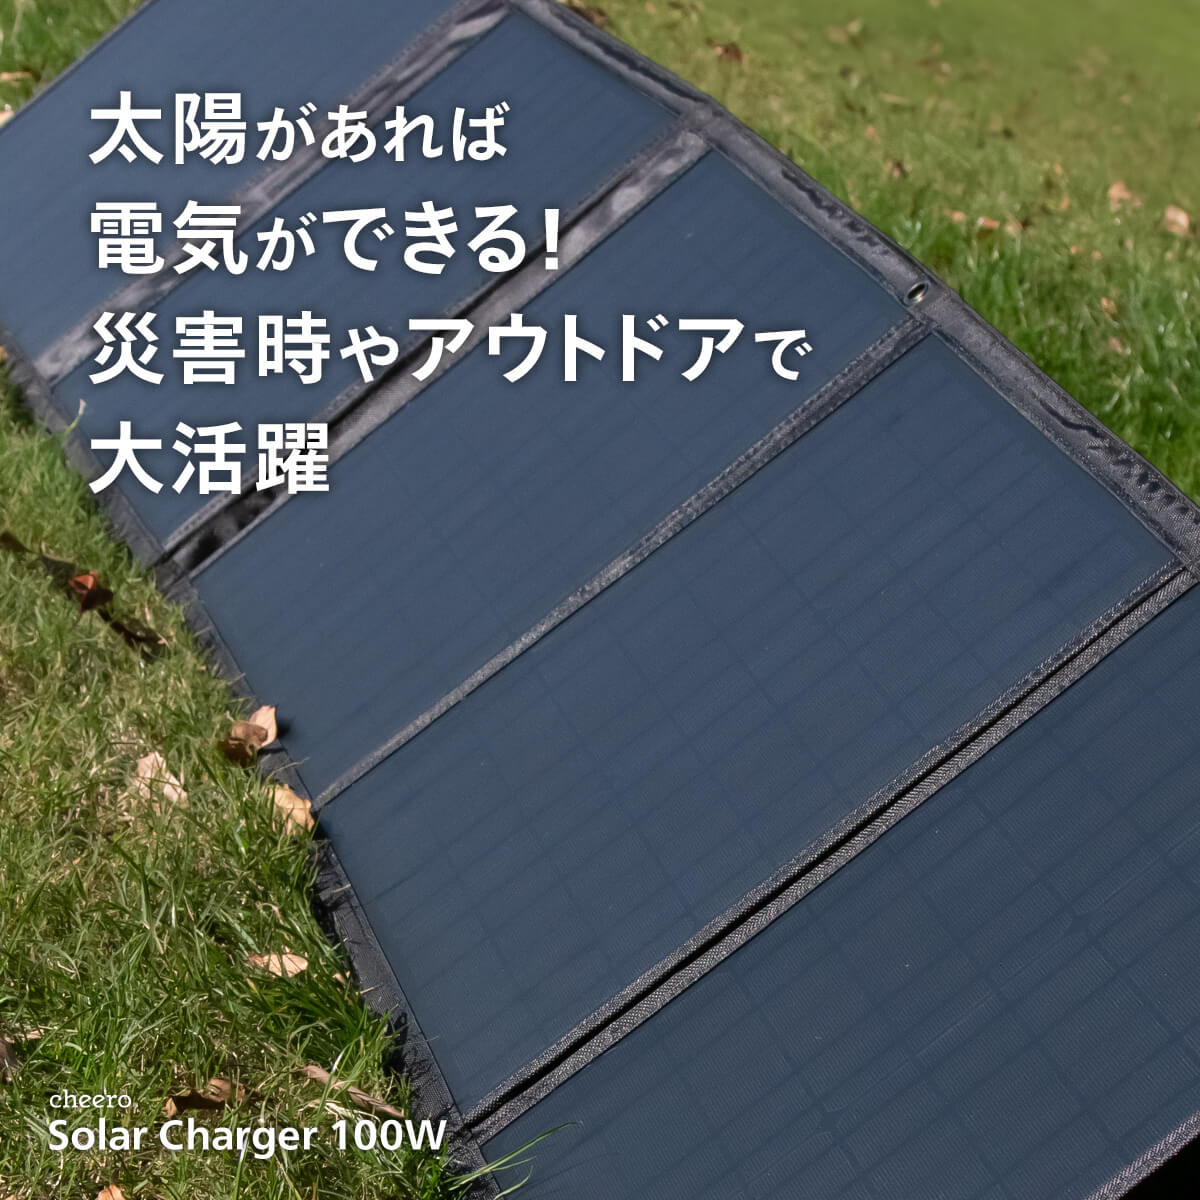 cheero Solar Charger 100W